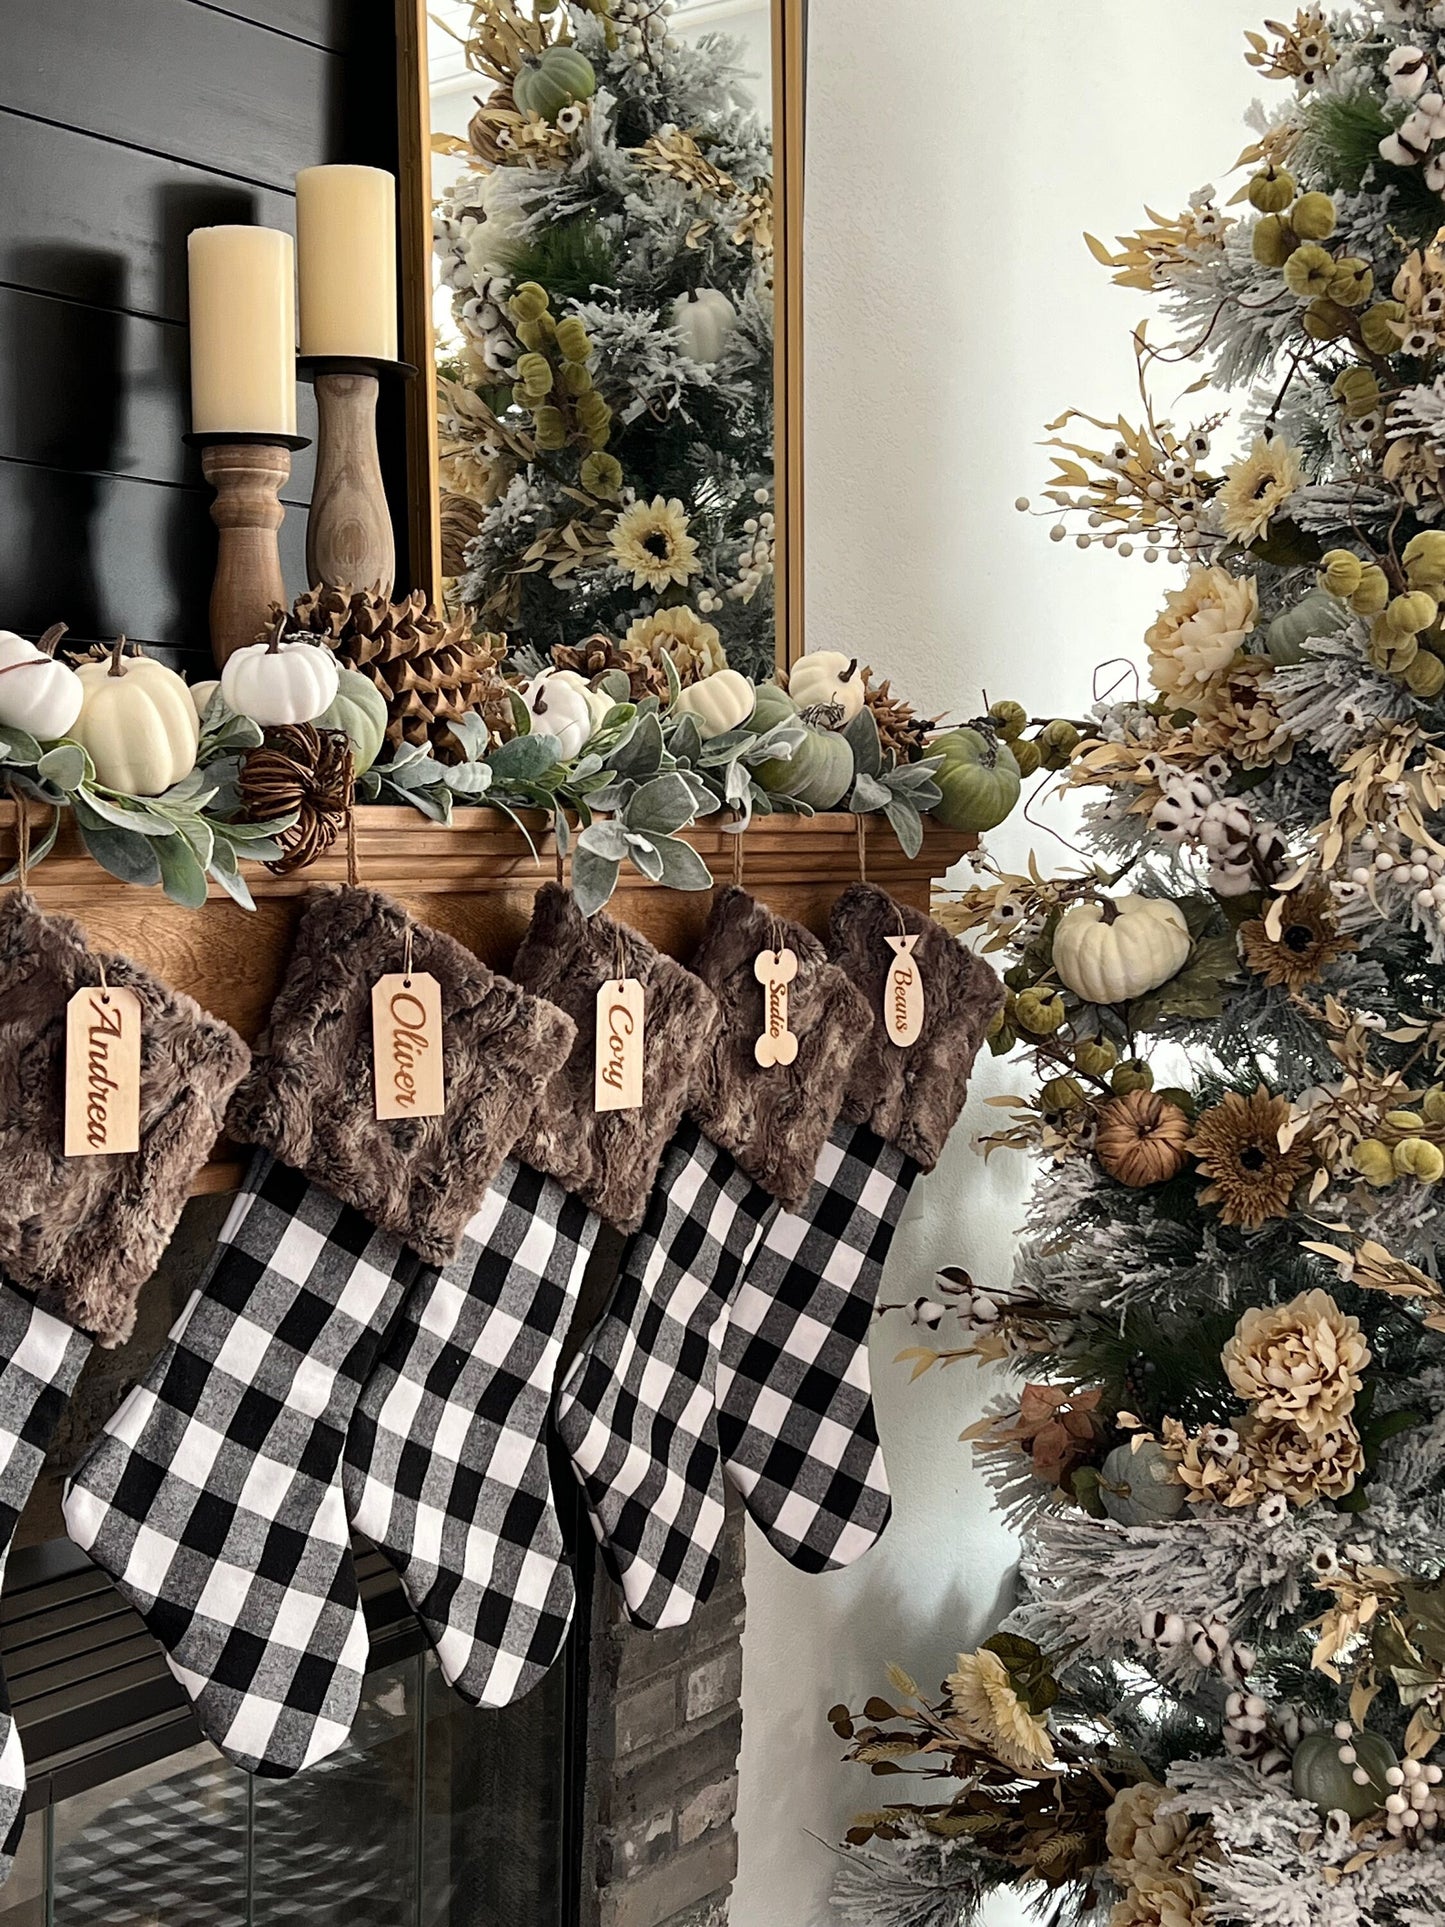 Buffalo Check Black and White Christmas Stocking - Personalized